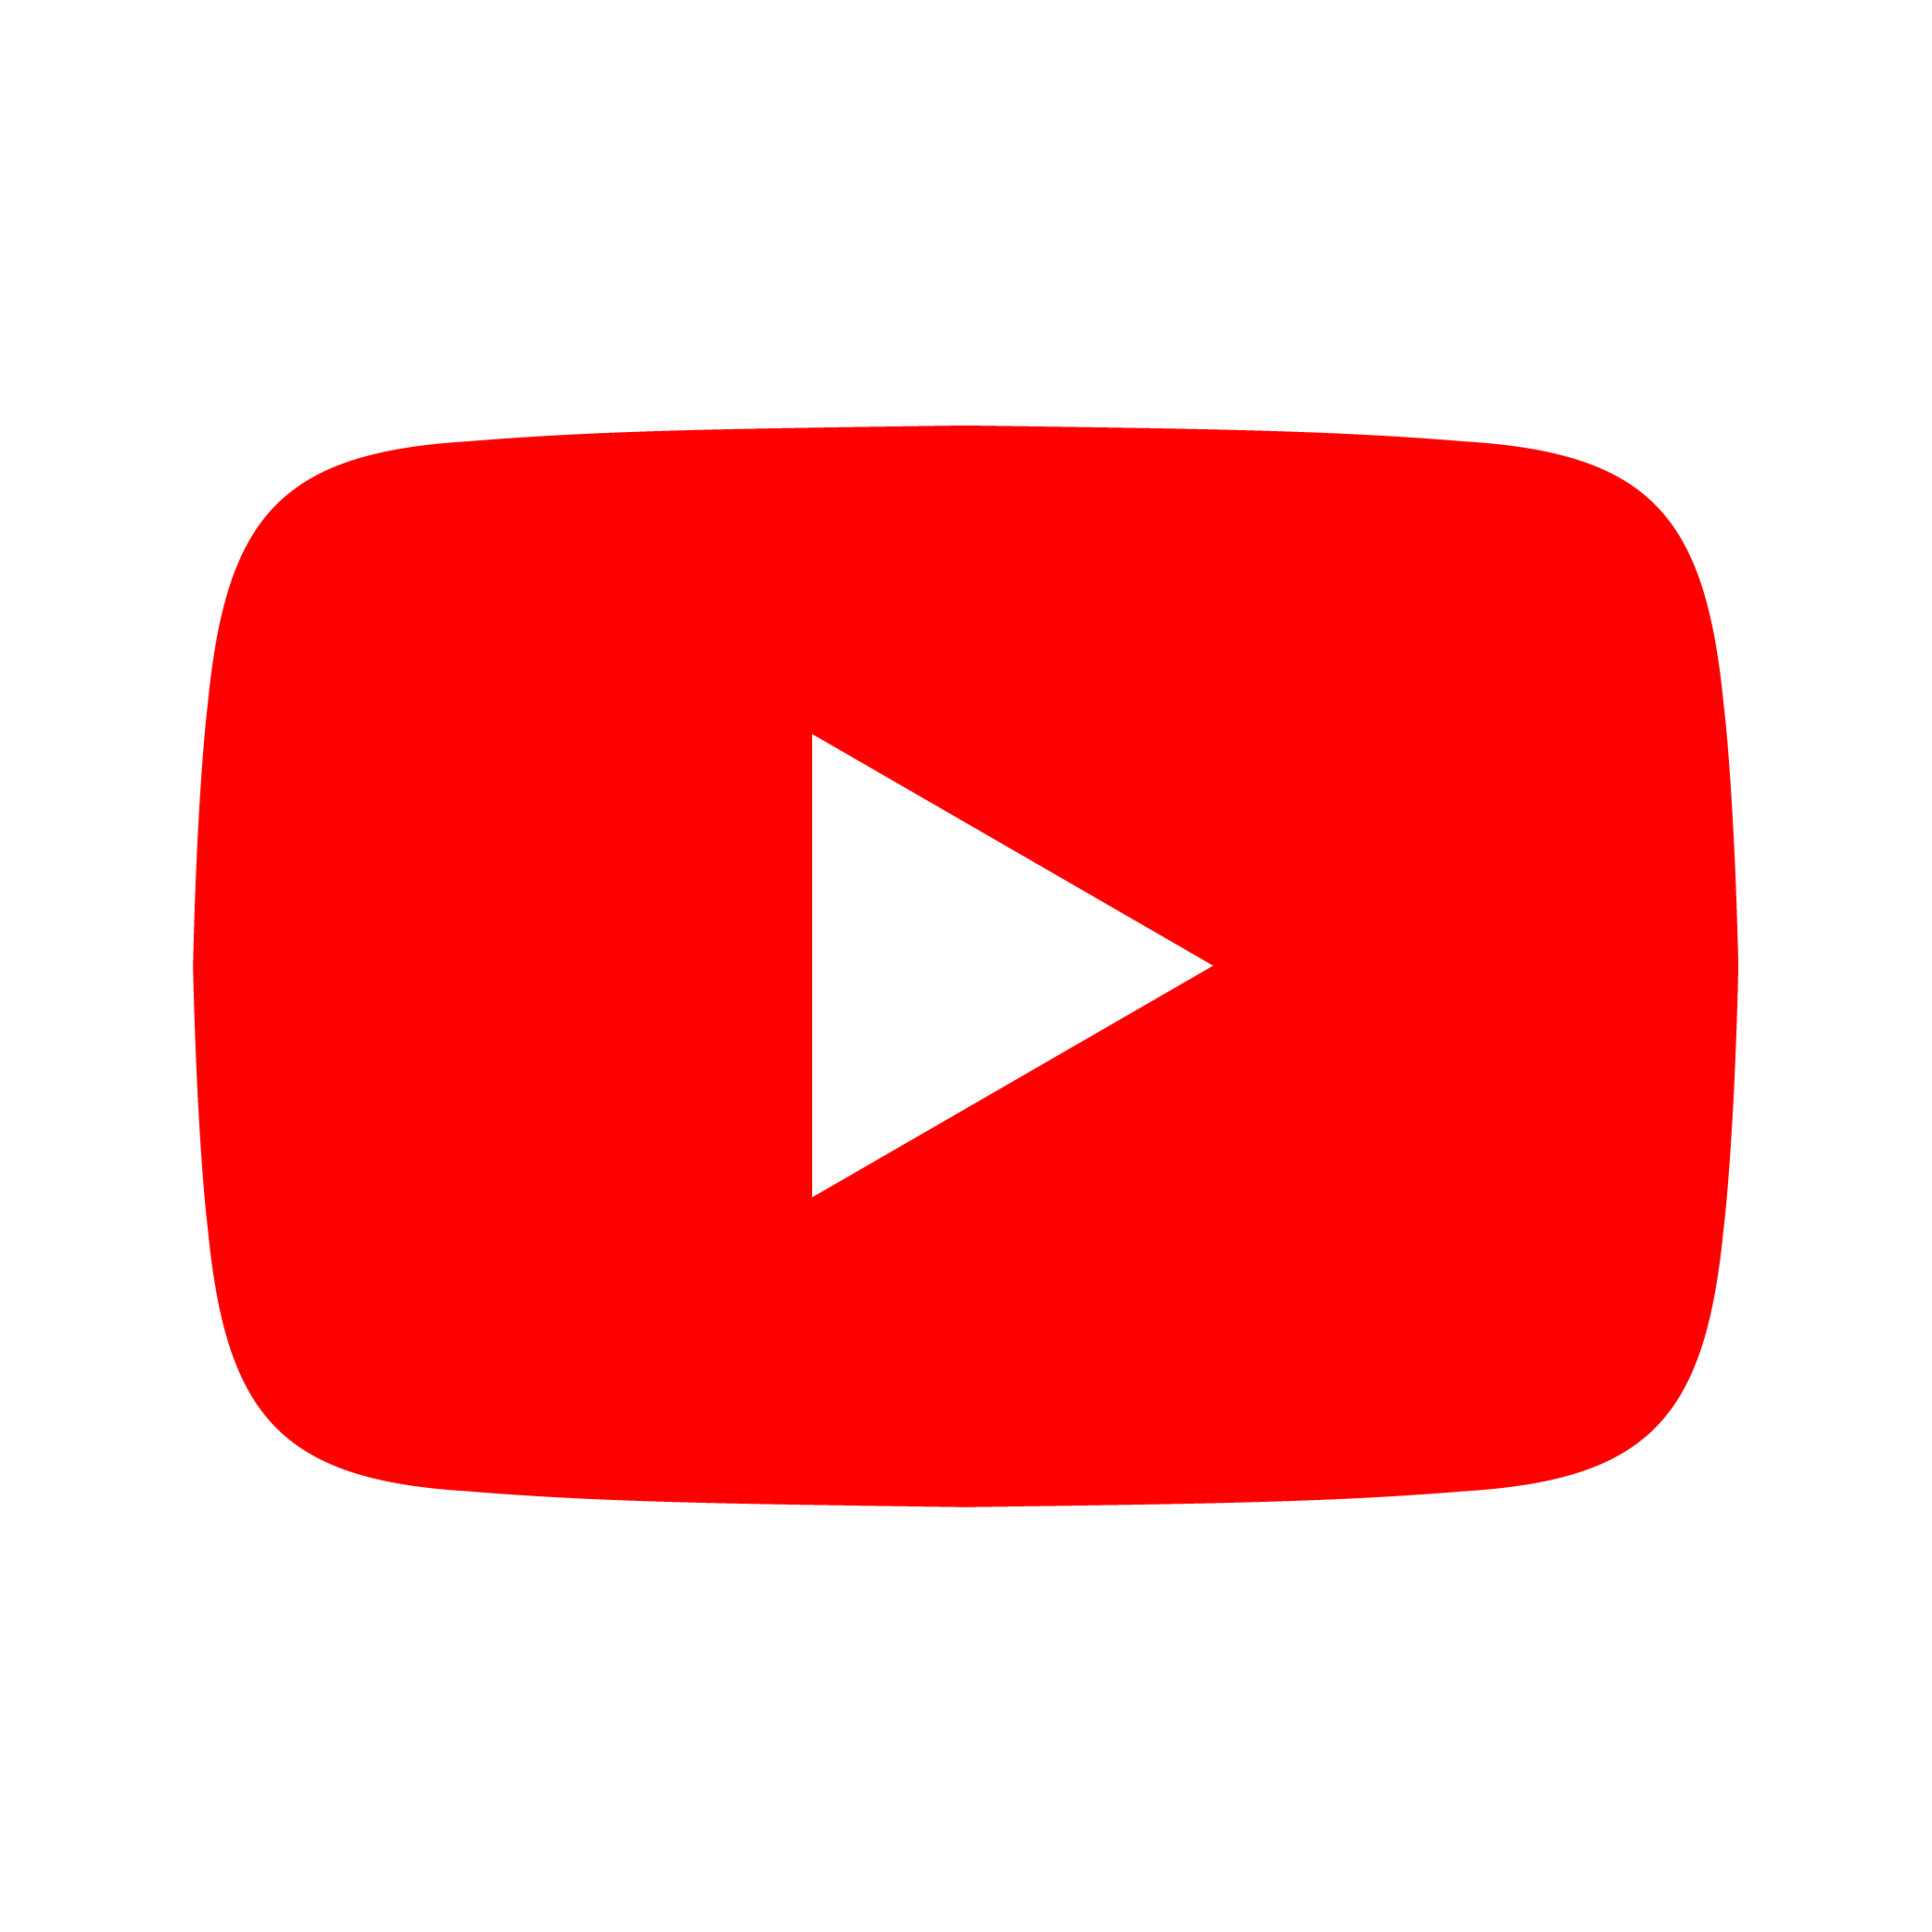 YouTube Logo